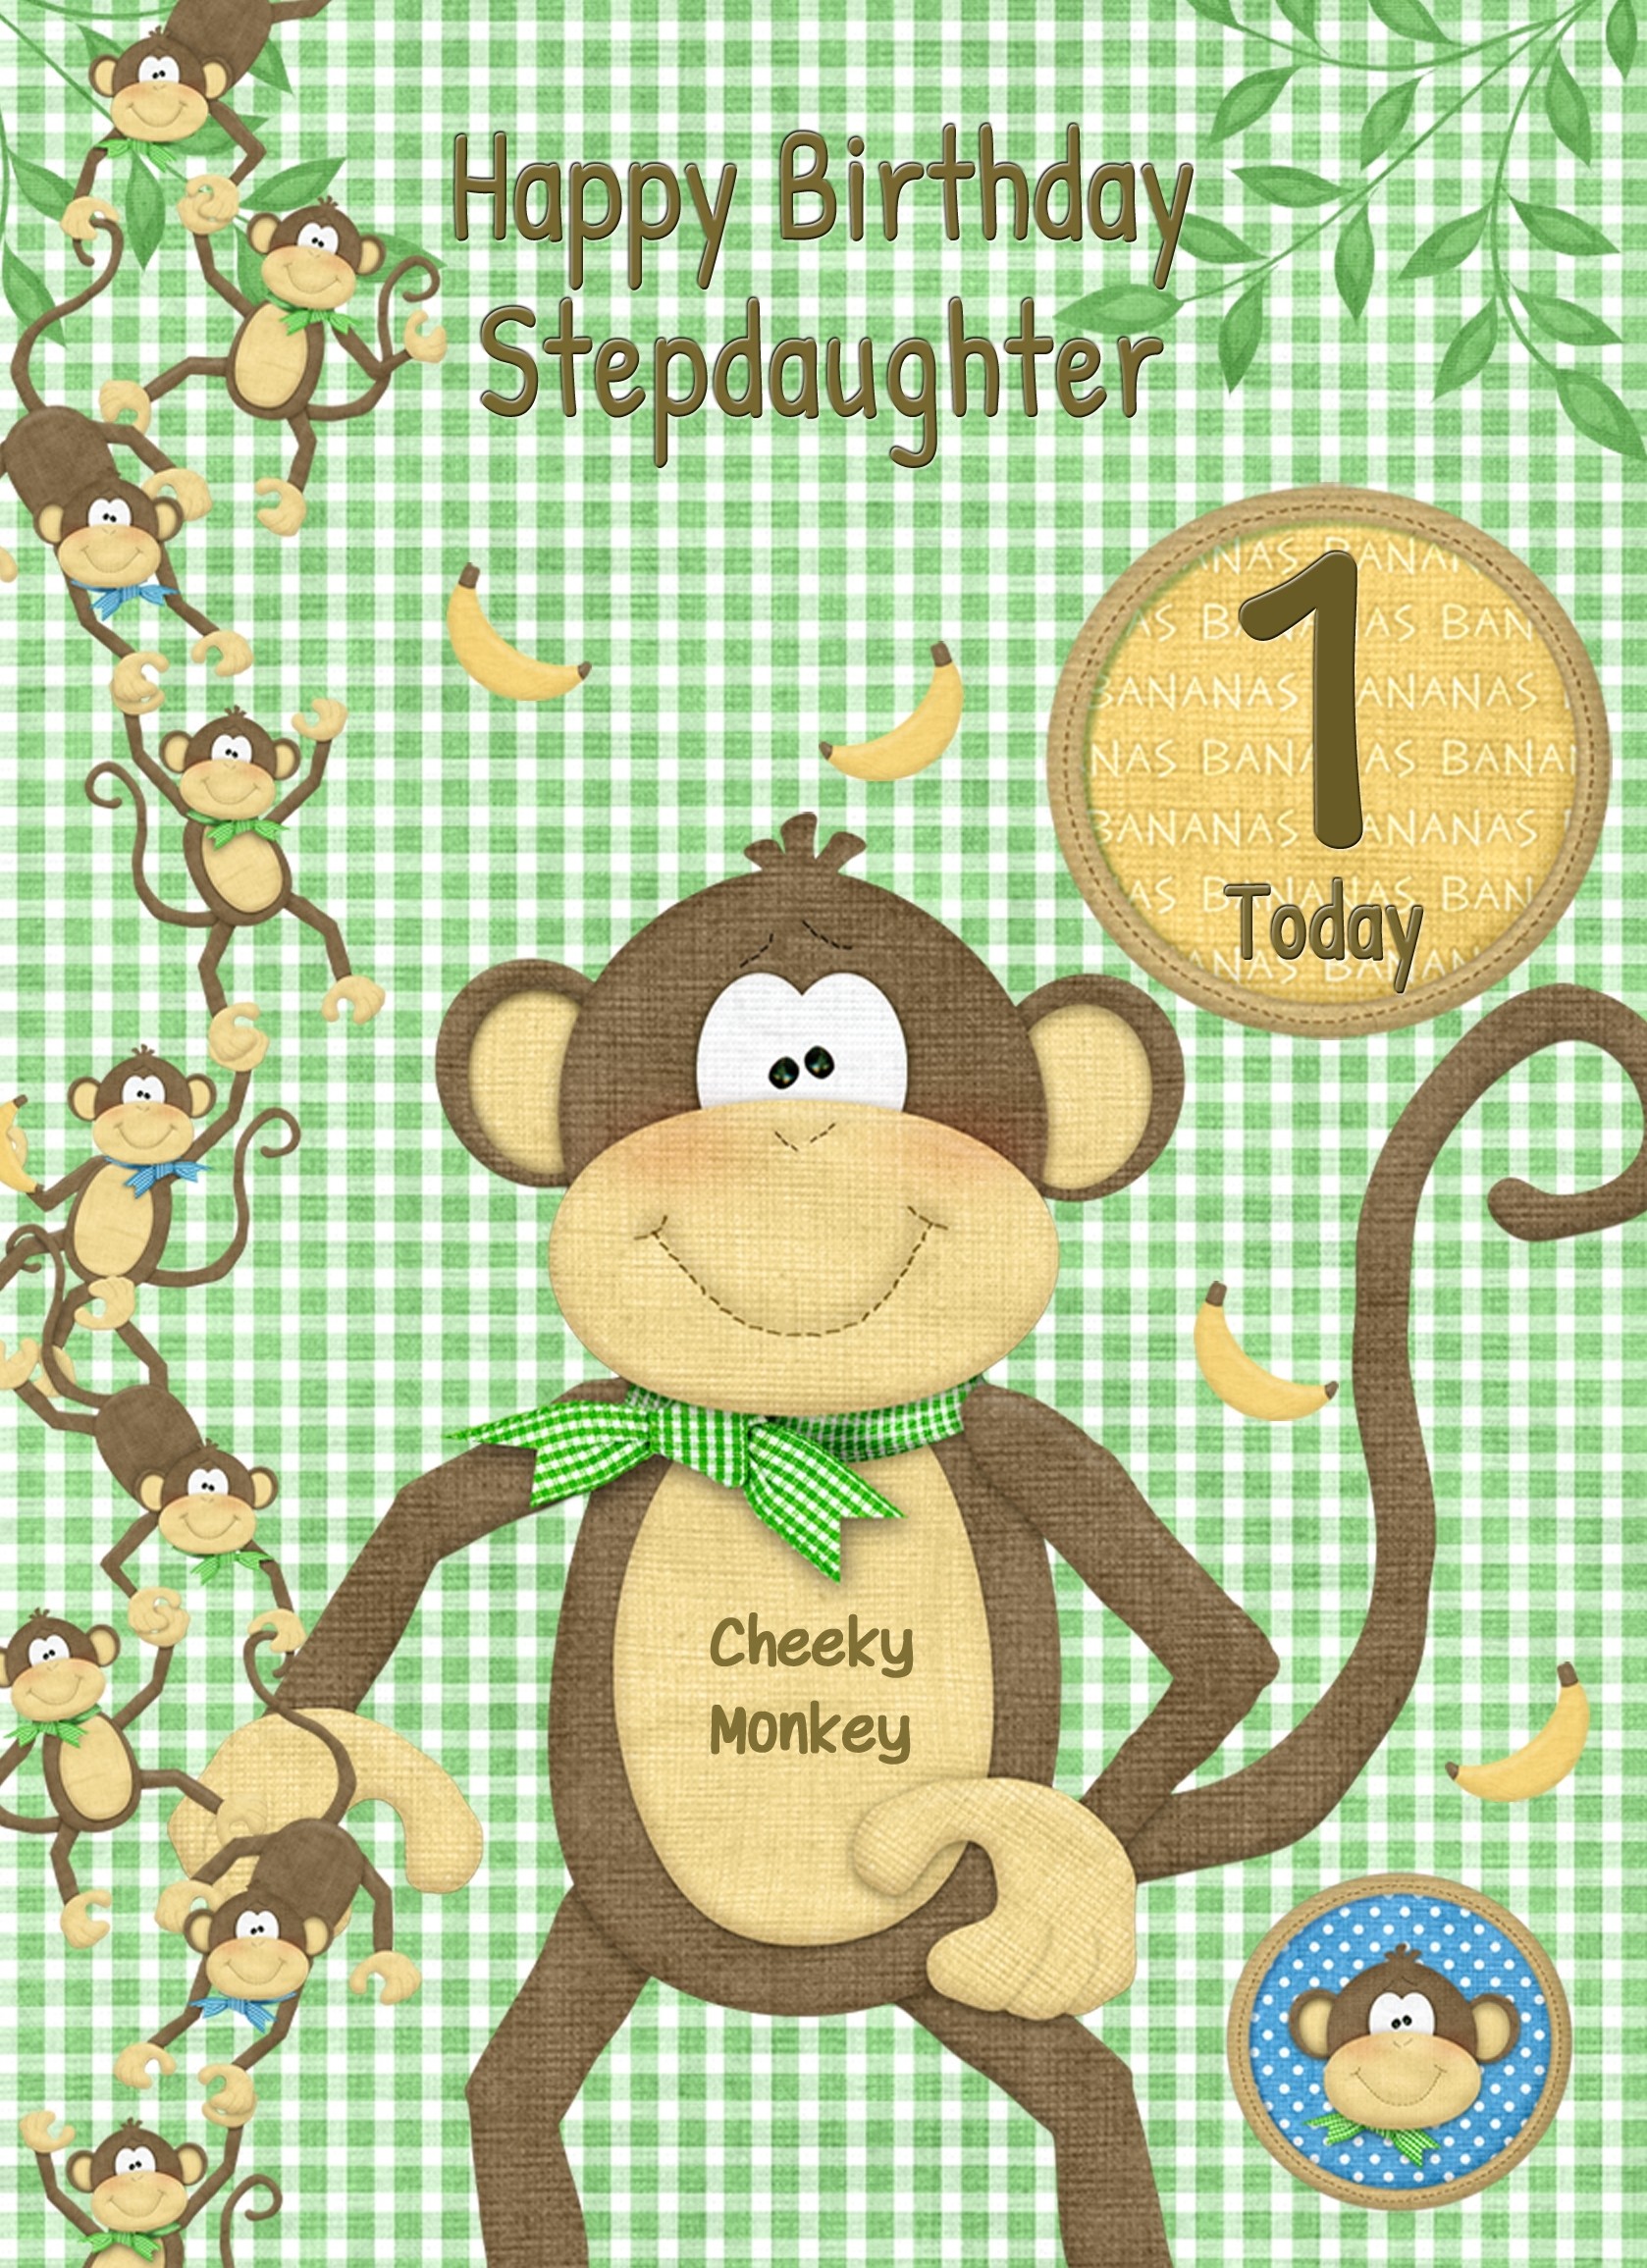 Kids 1st Birthday Cheeky Monkey Cartoon Card for Stepdaughter